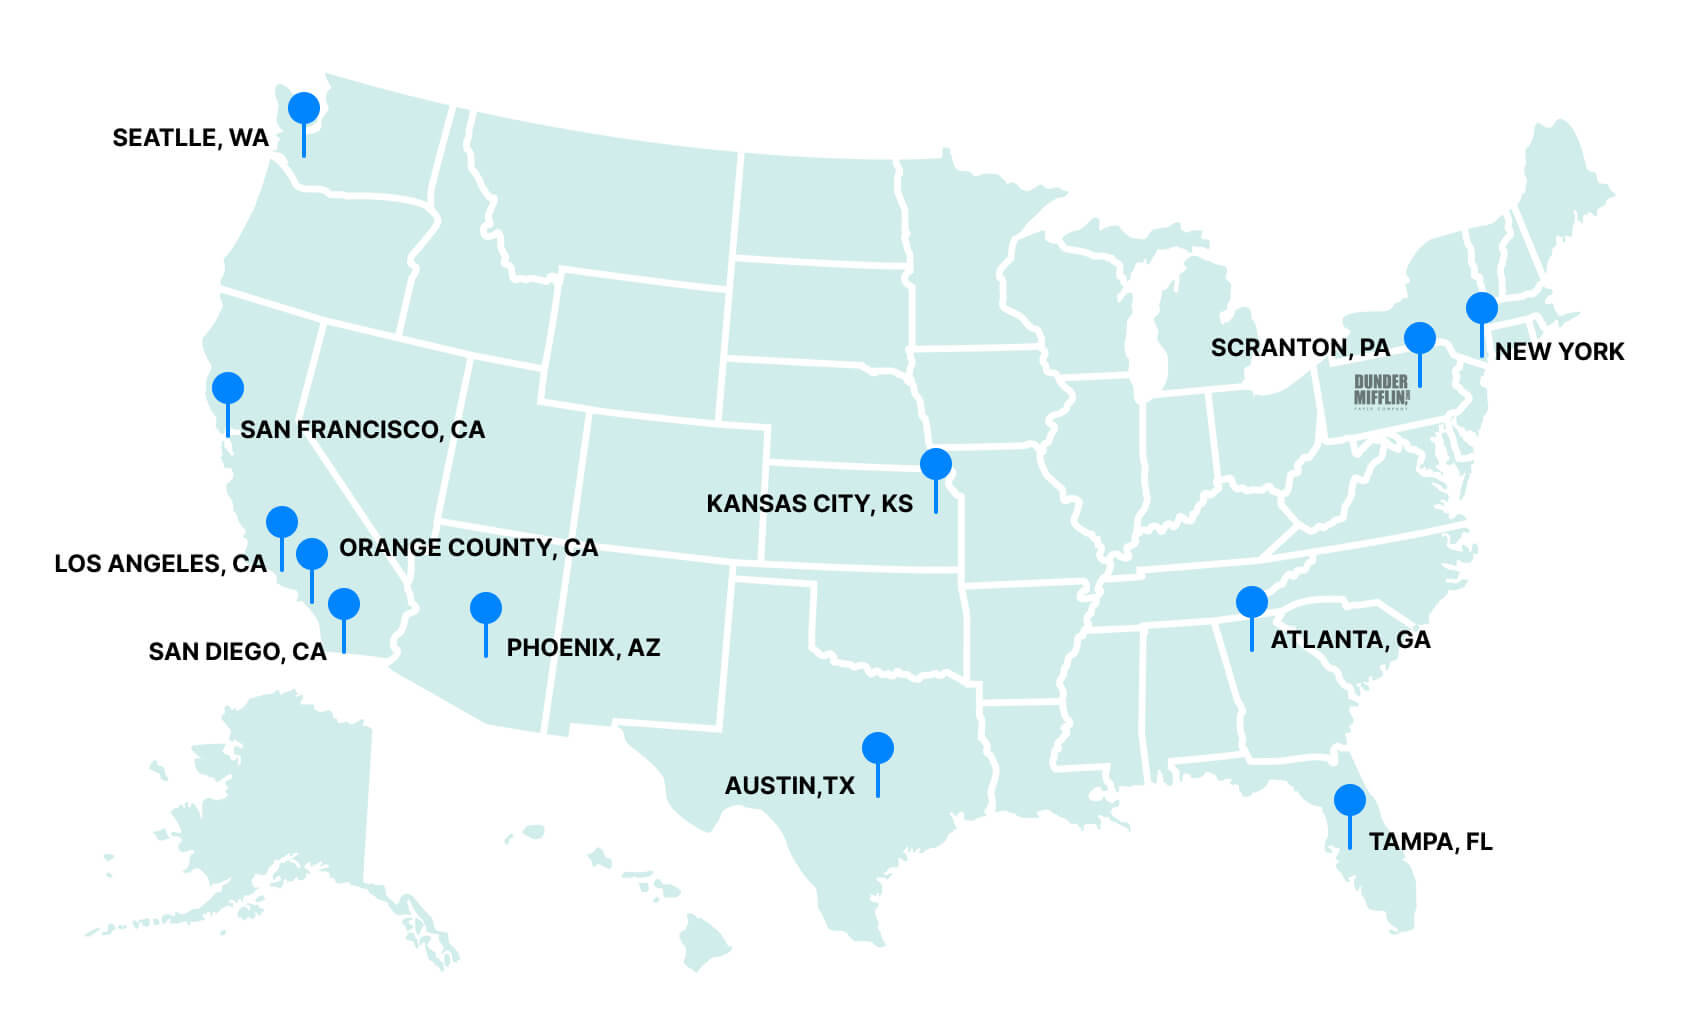 map of the united states with pins in scranton, new york, atlanta, tampa, austin, kansas city, austin, phoenix, san diego, orange county, los angeles, san francisco, and seattle